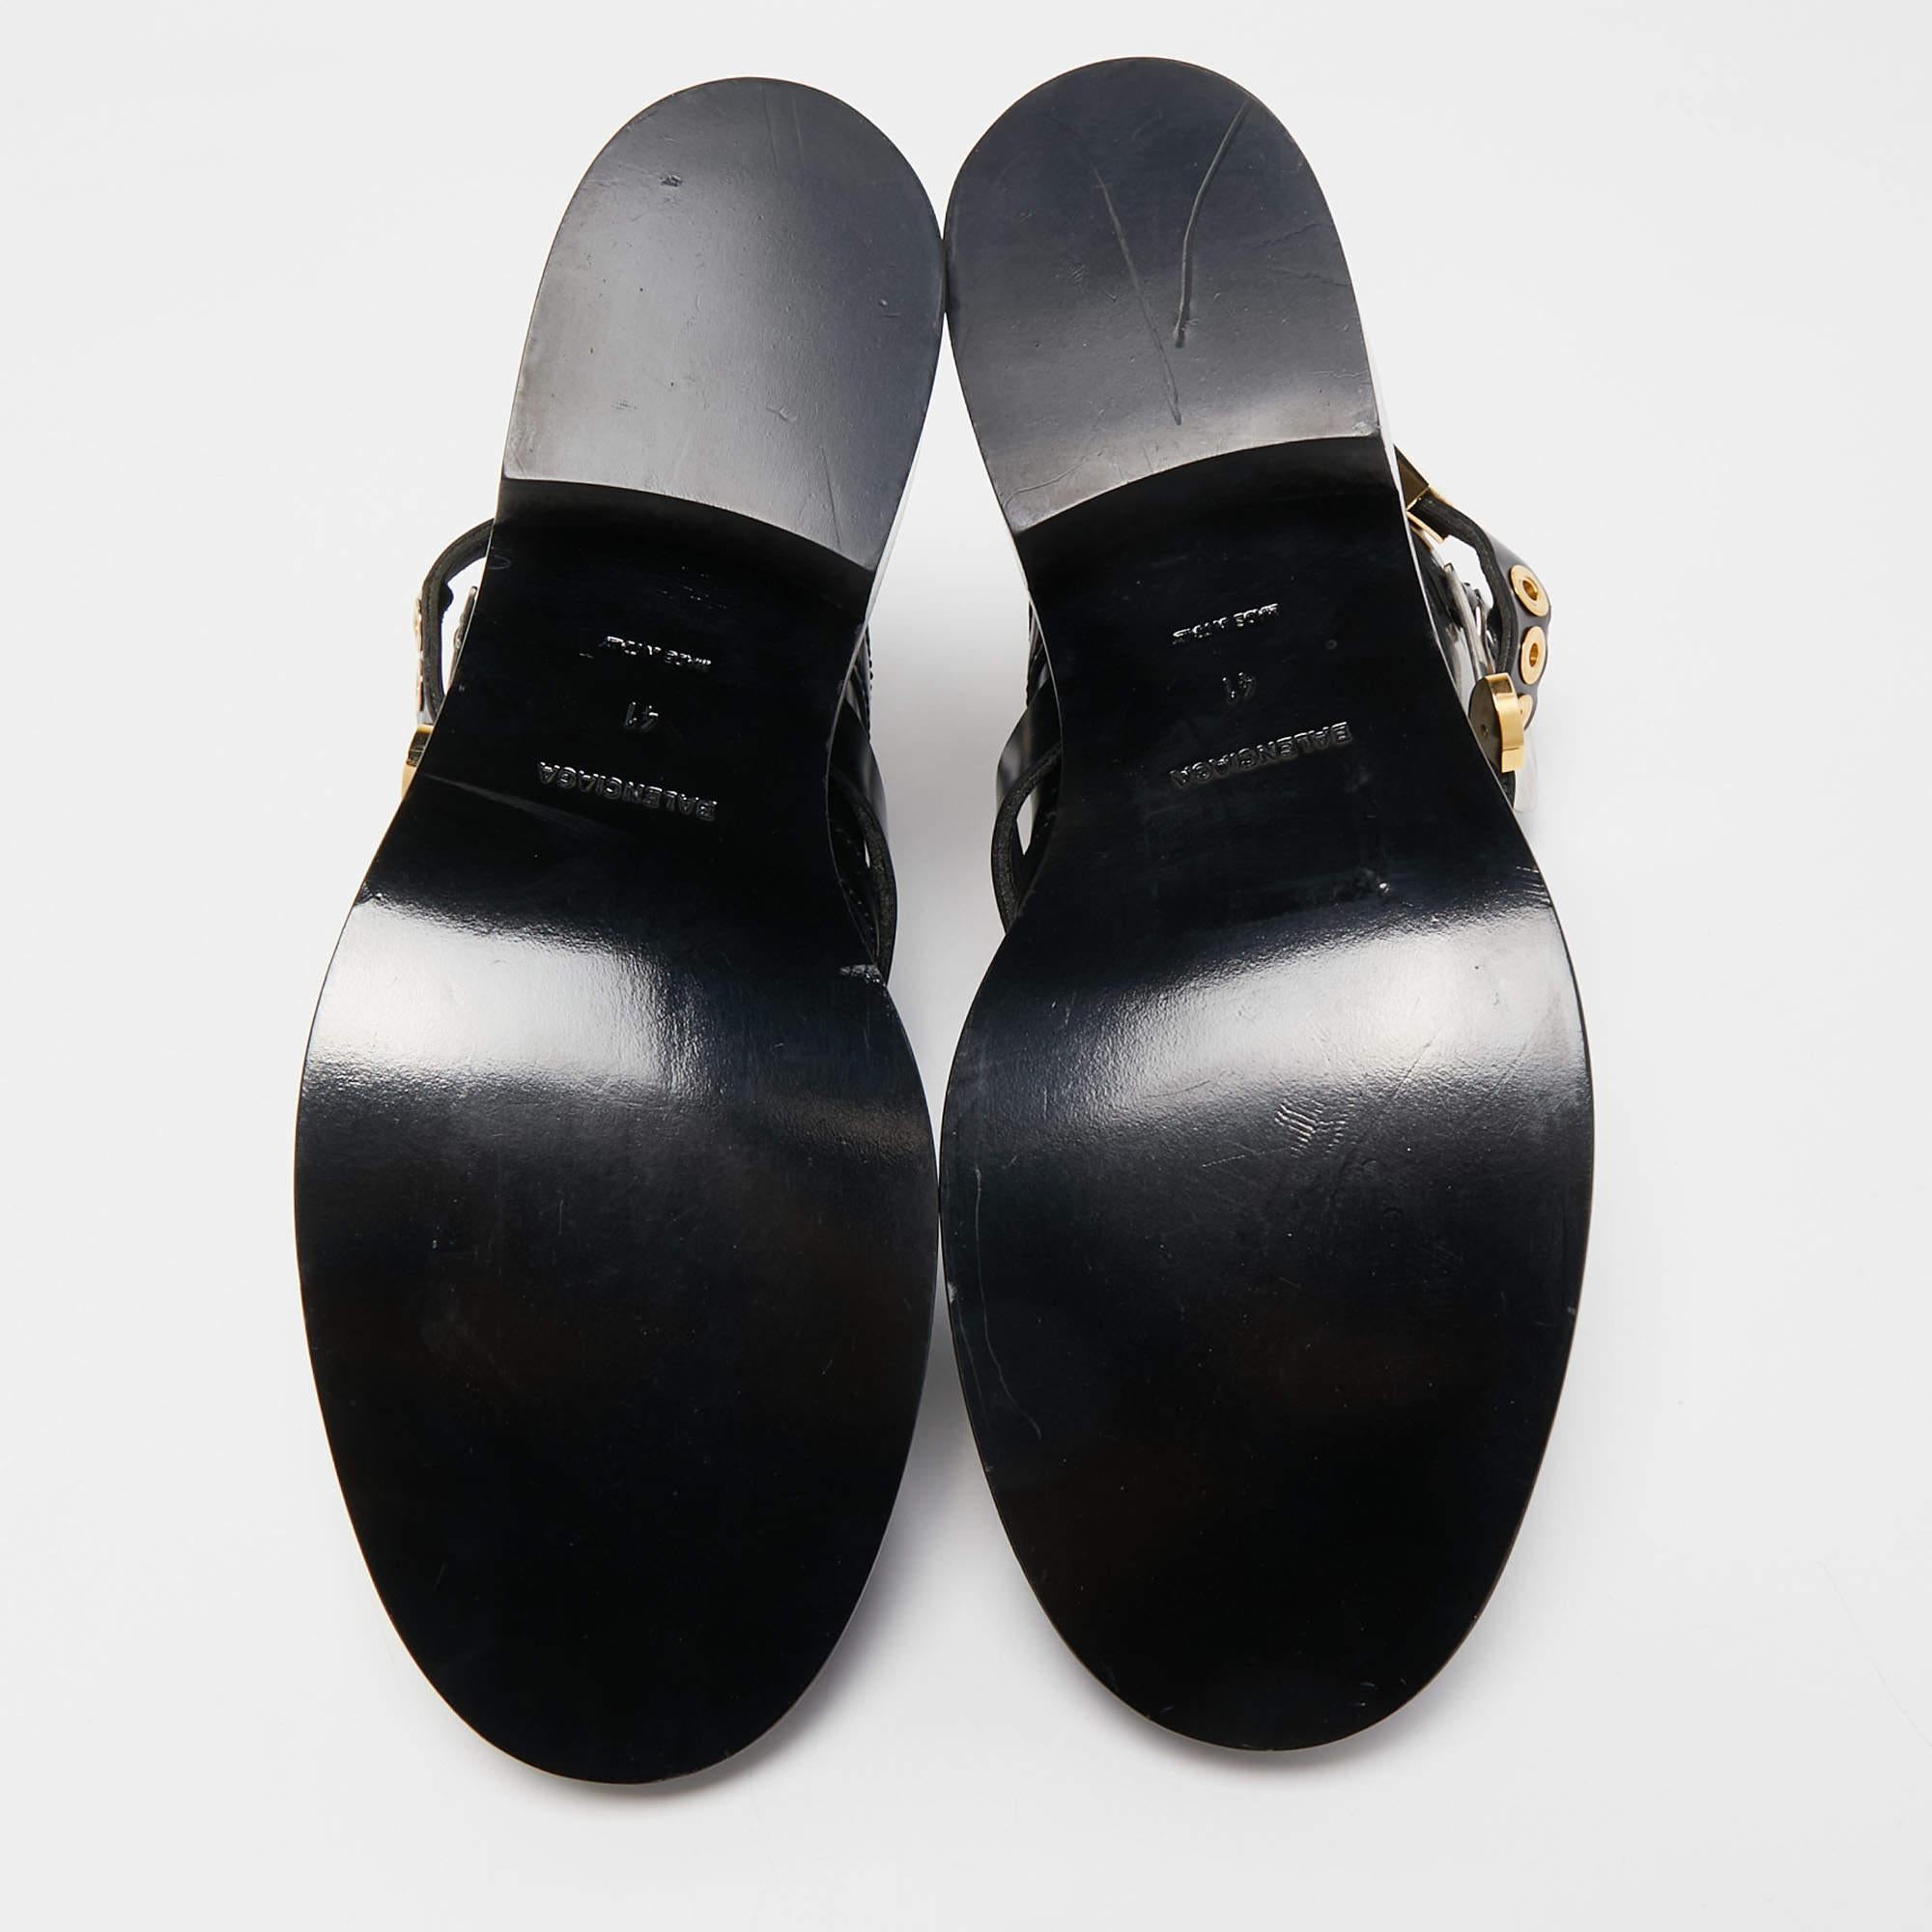 Balenciaga Black Leather Ceinture Buckle Detail Ankle Boots Size 41 6